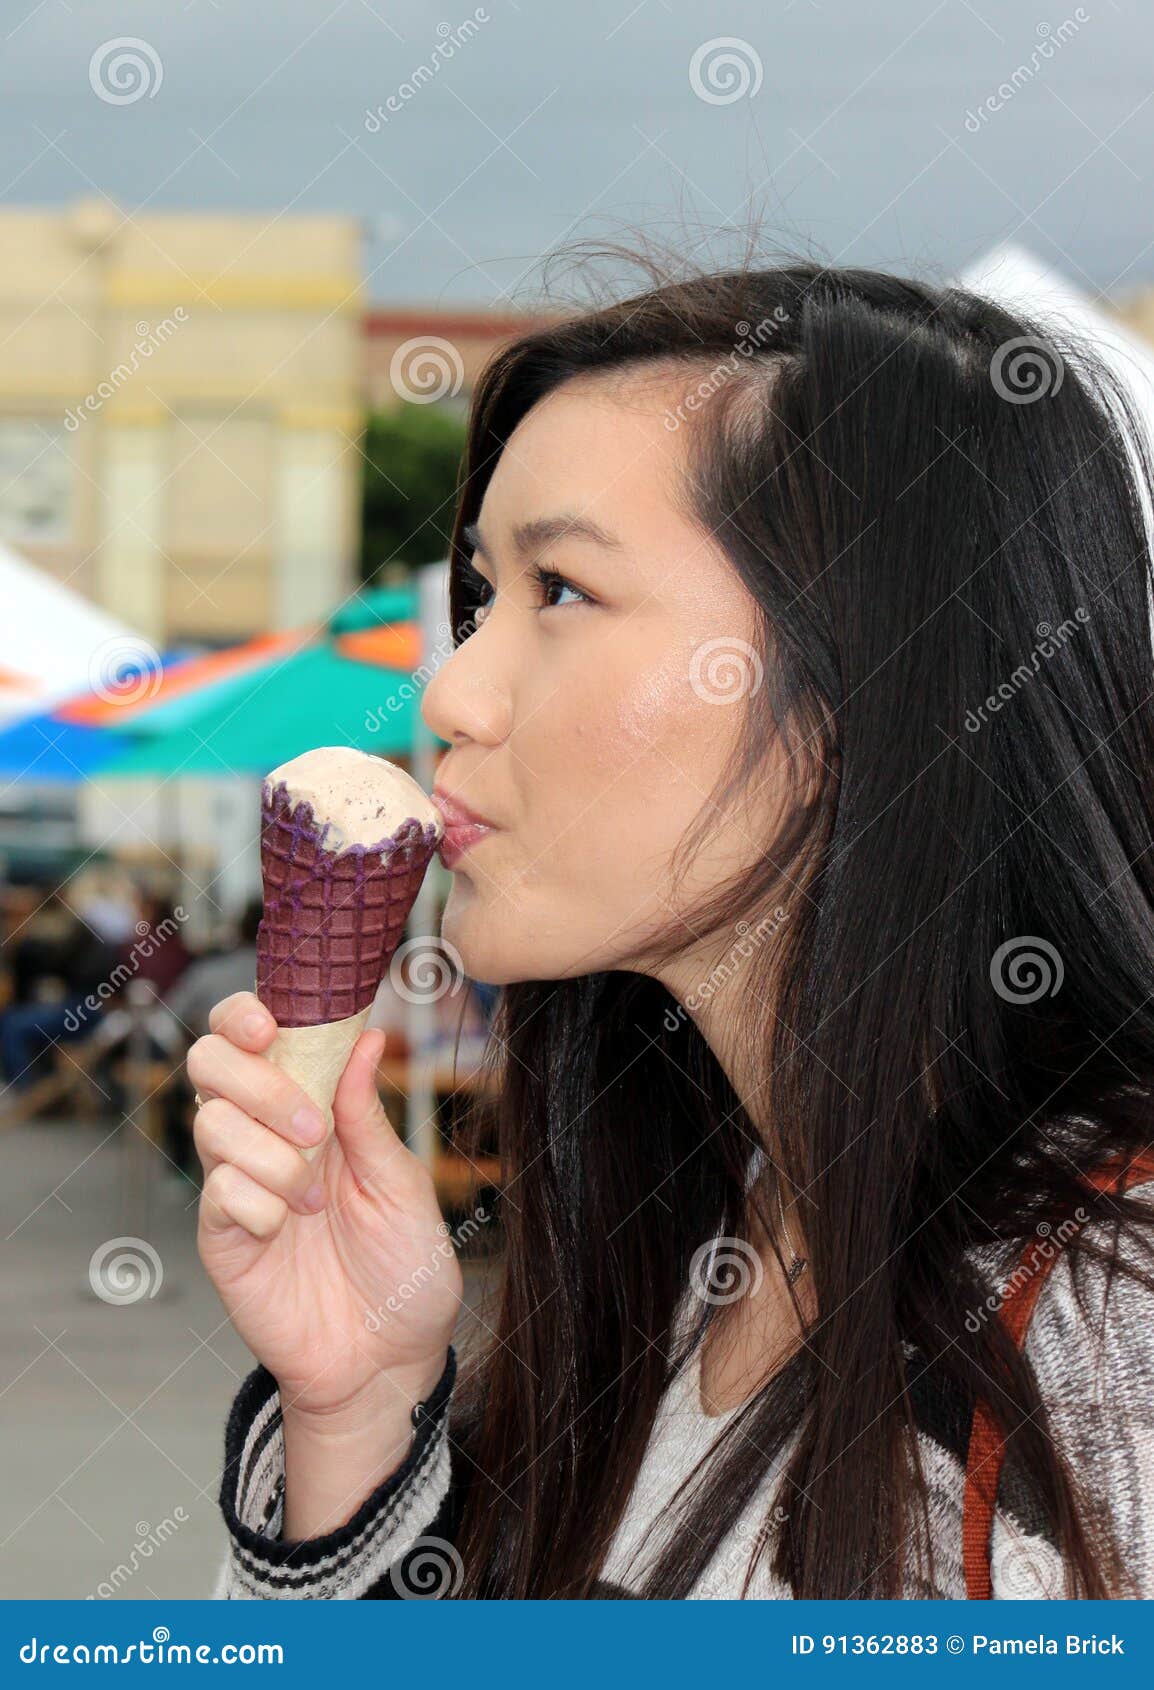 Young Asian Woman Enjoys An Ice Cream Cone Indulgence Stock Image